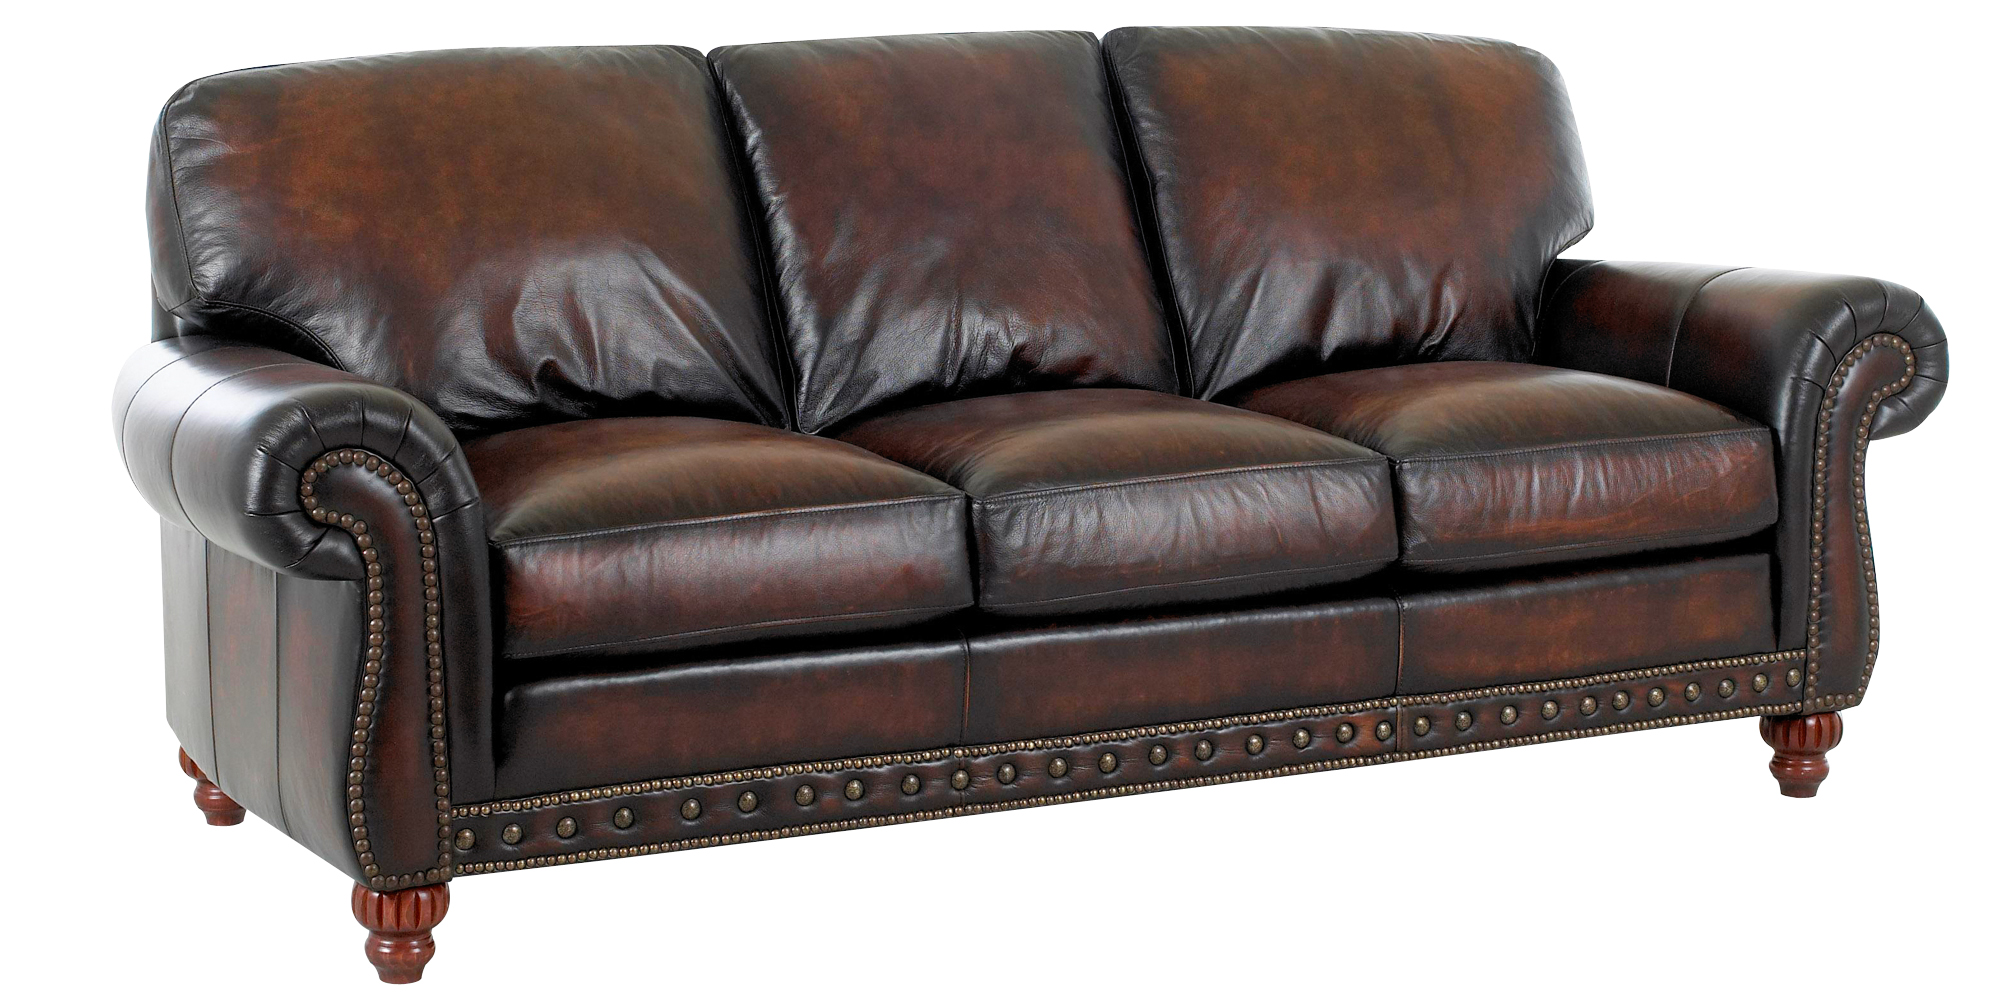 leather furniture gerard old world european set OORBXTM